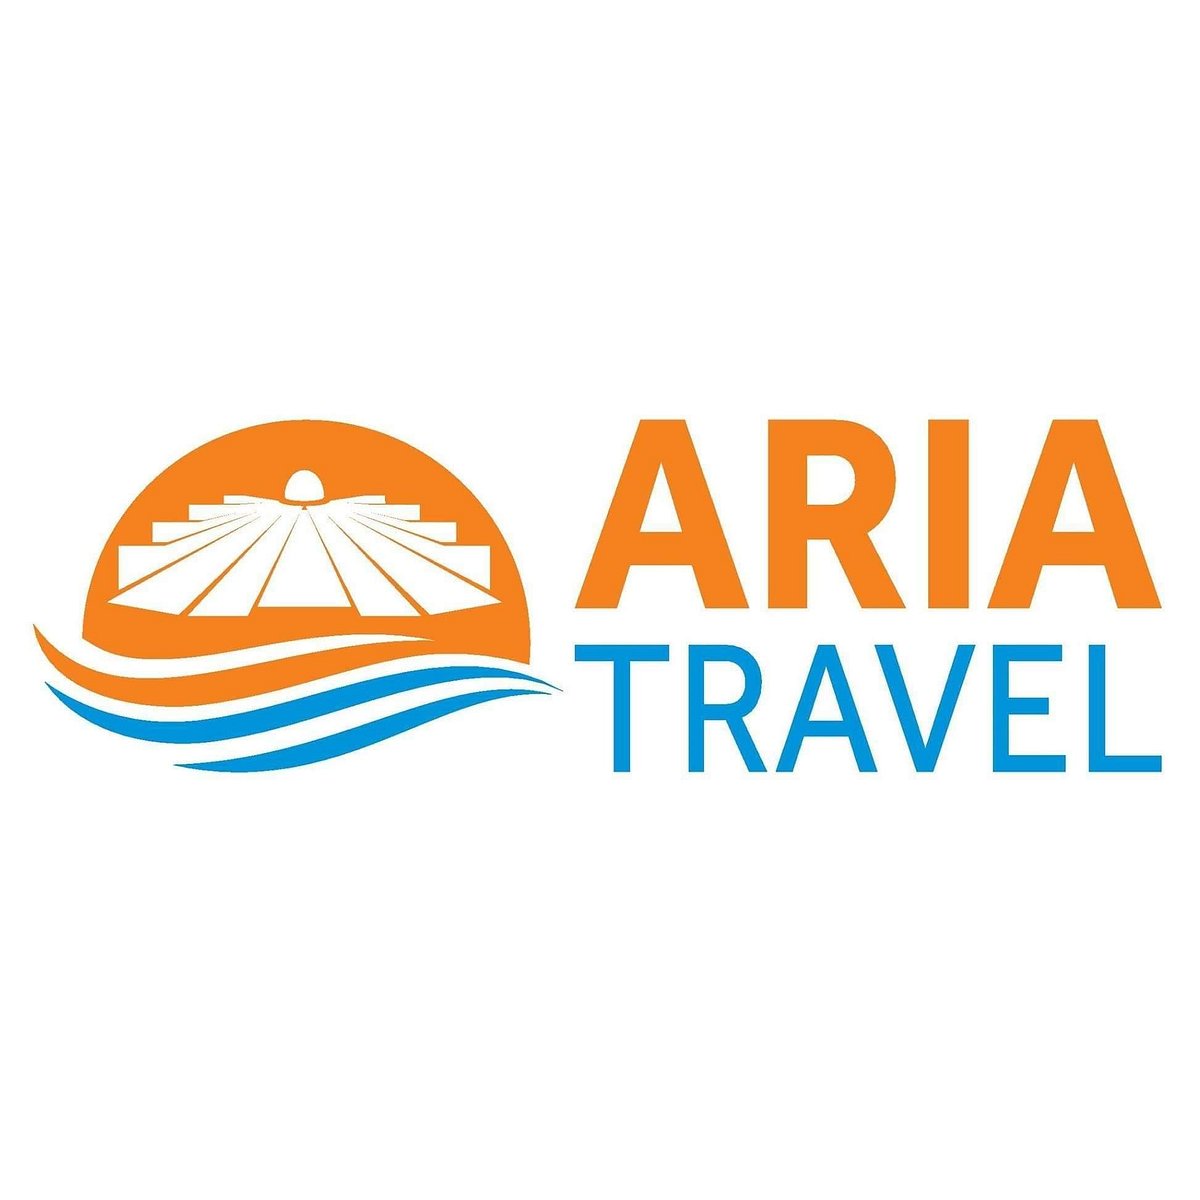 aria travel service tours